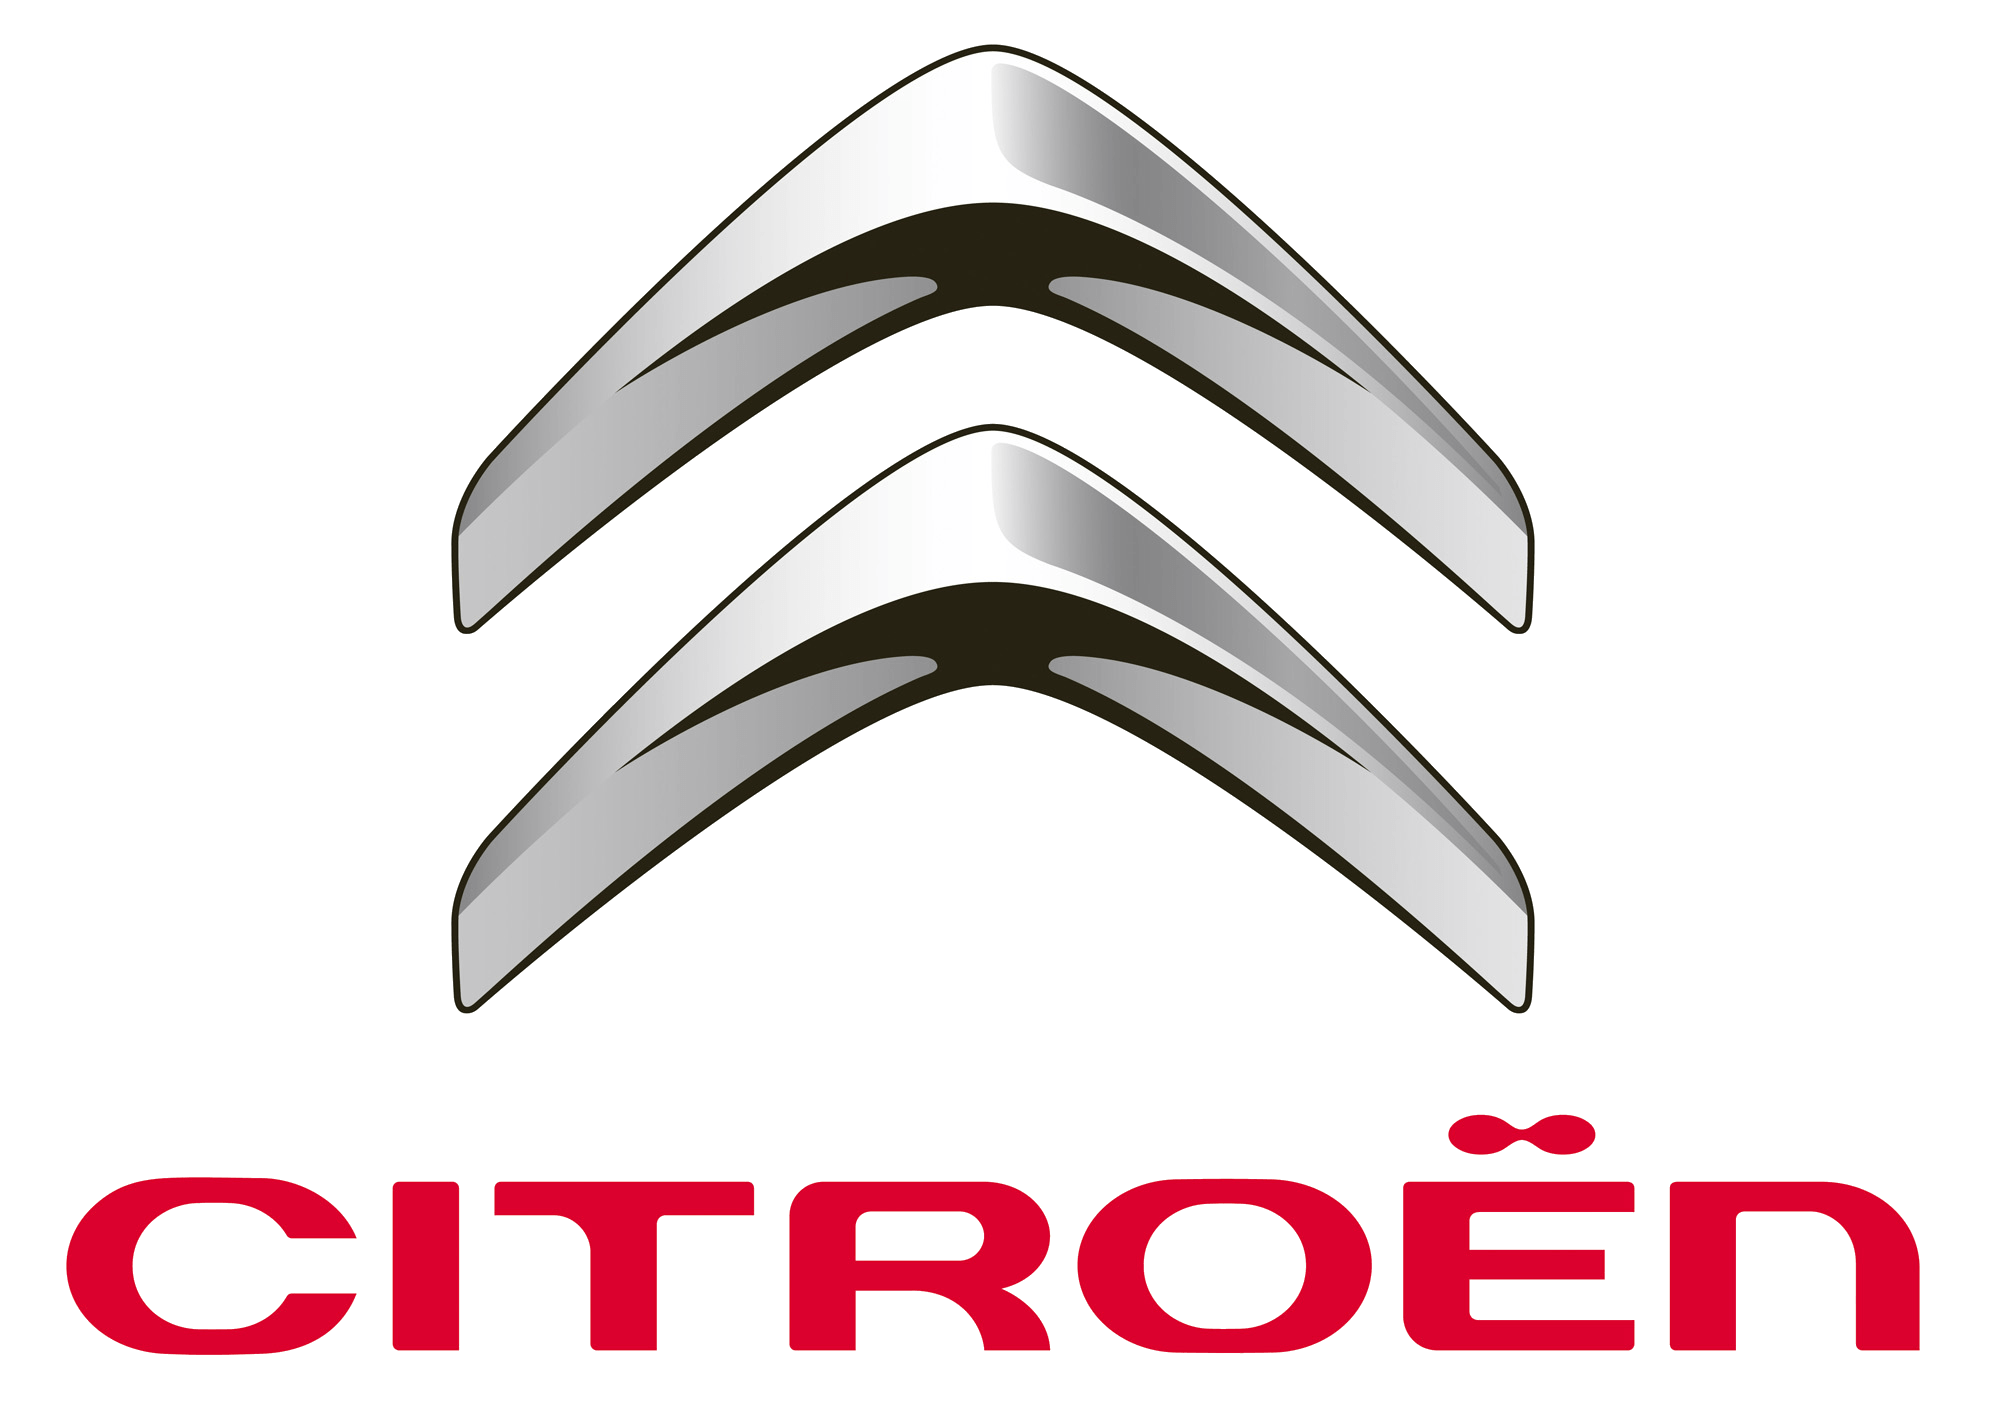 2 Silver Boomerangs Logo - Citroen Logo, Citroen Car Symbol Meaning and History | Car Brand ...